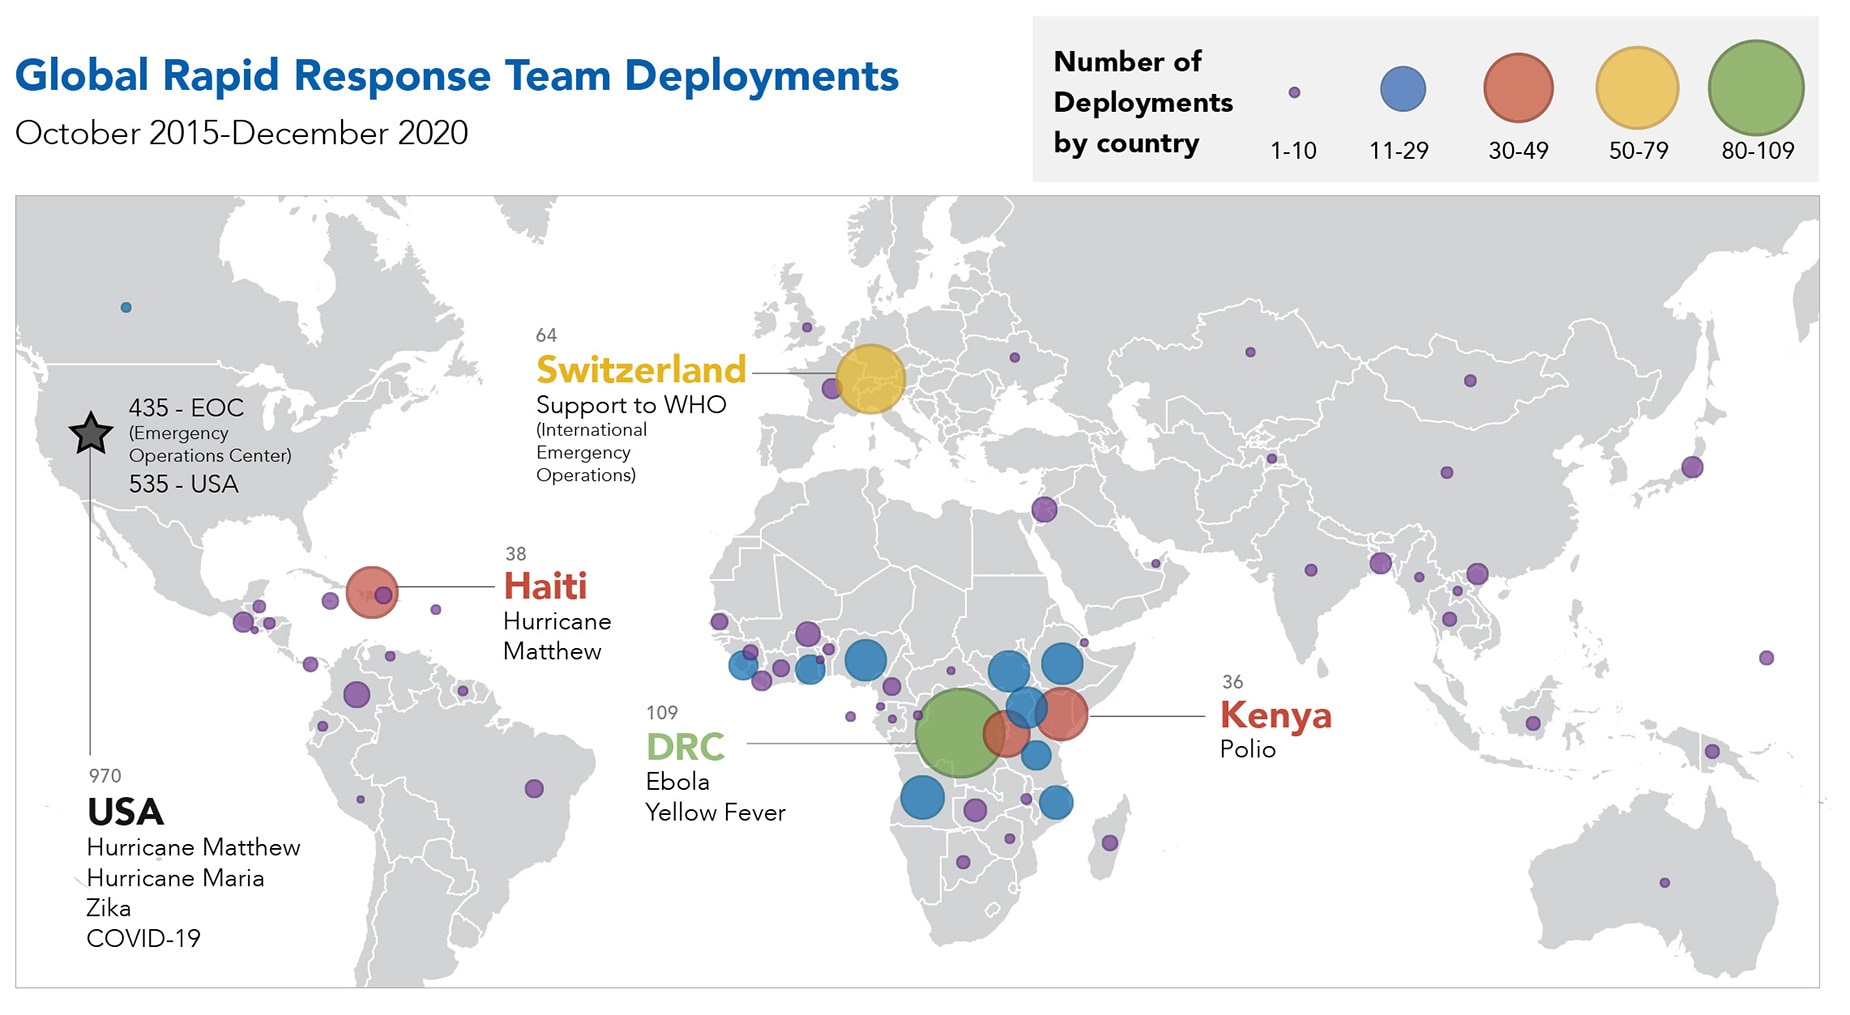 Global rapid response team deployments